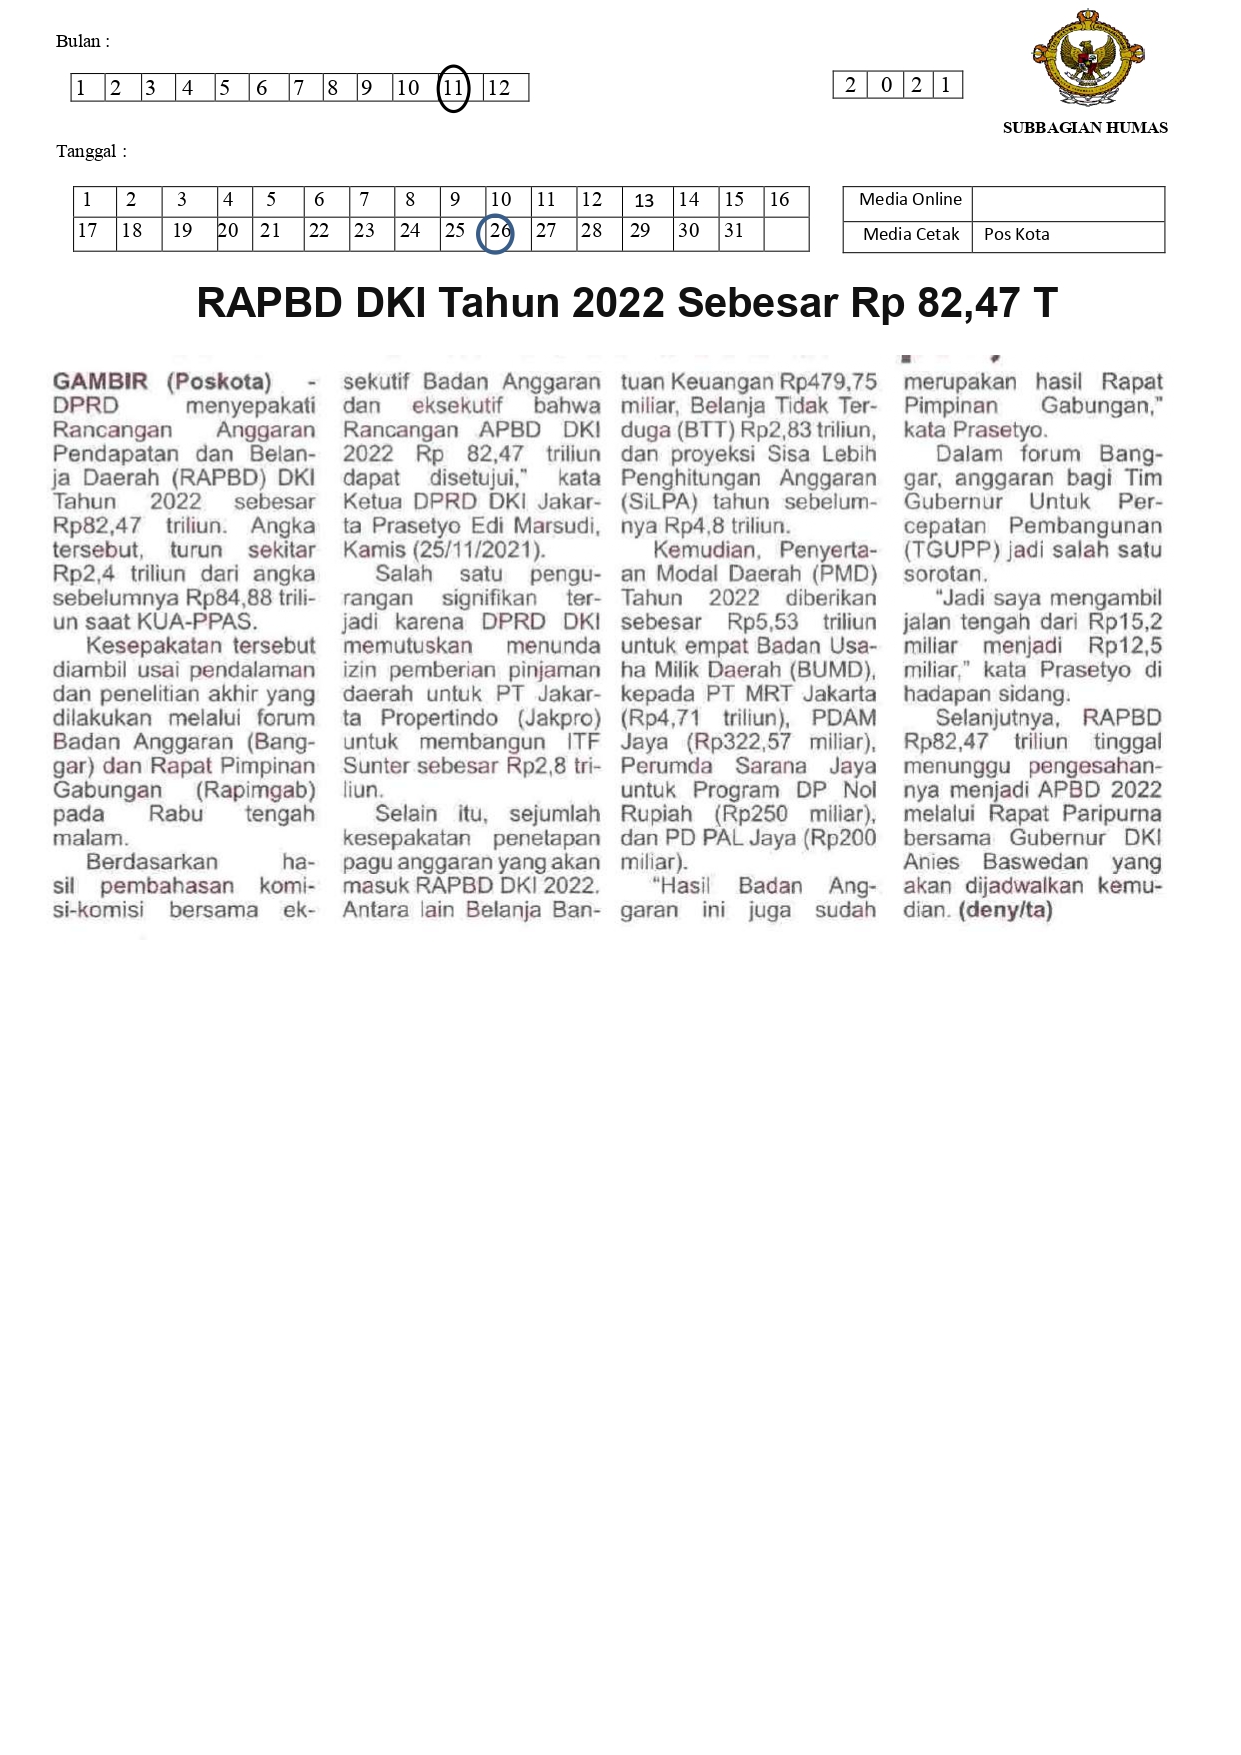 RAPBD DKI Tahun 2022 Sebesar Rp 82,47 T